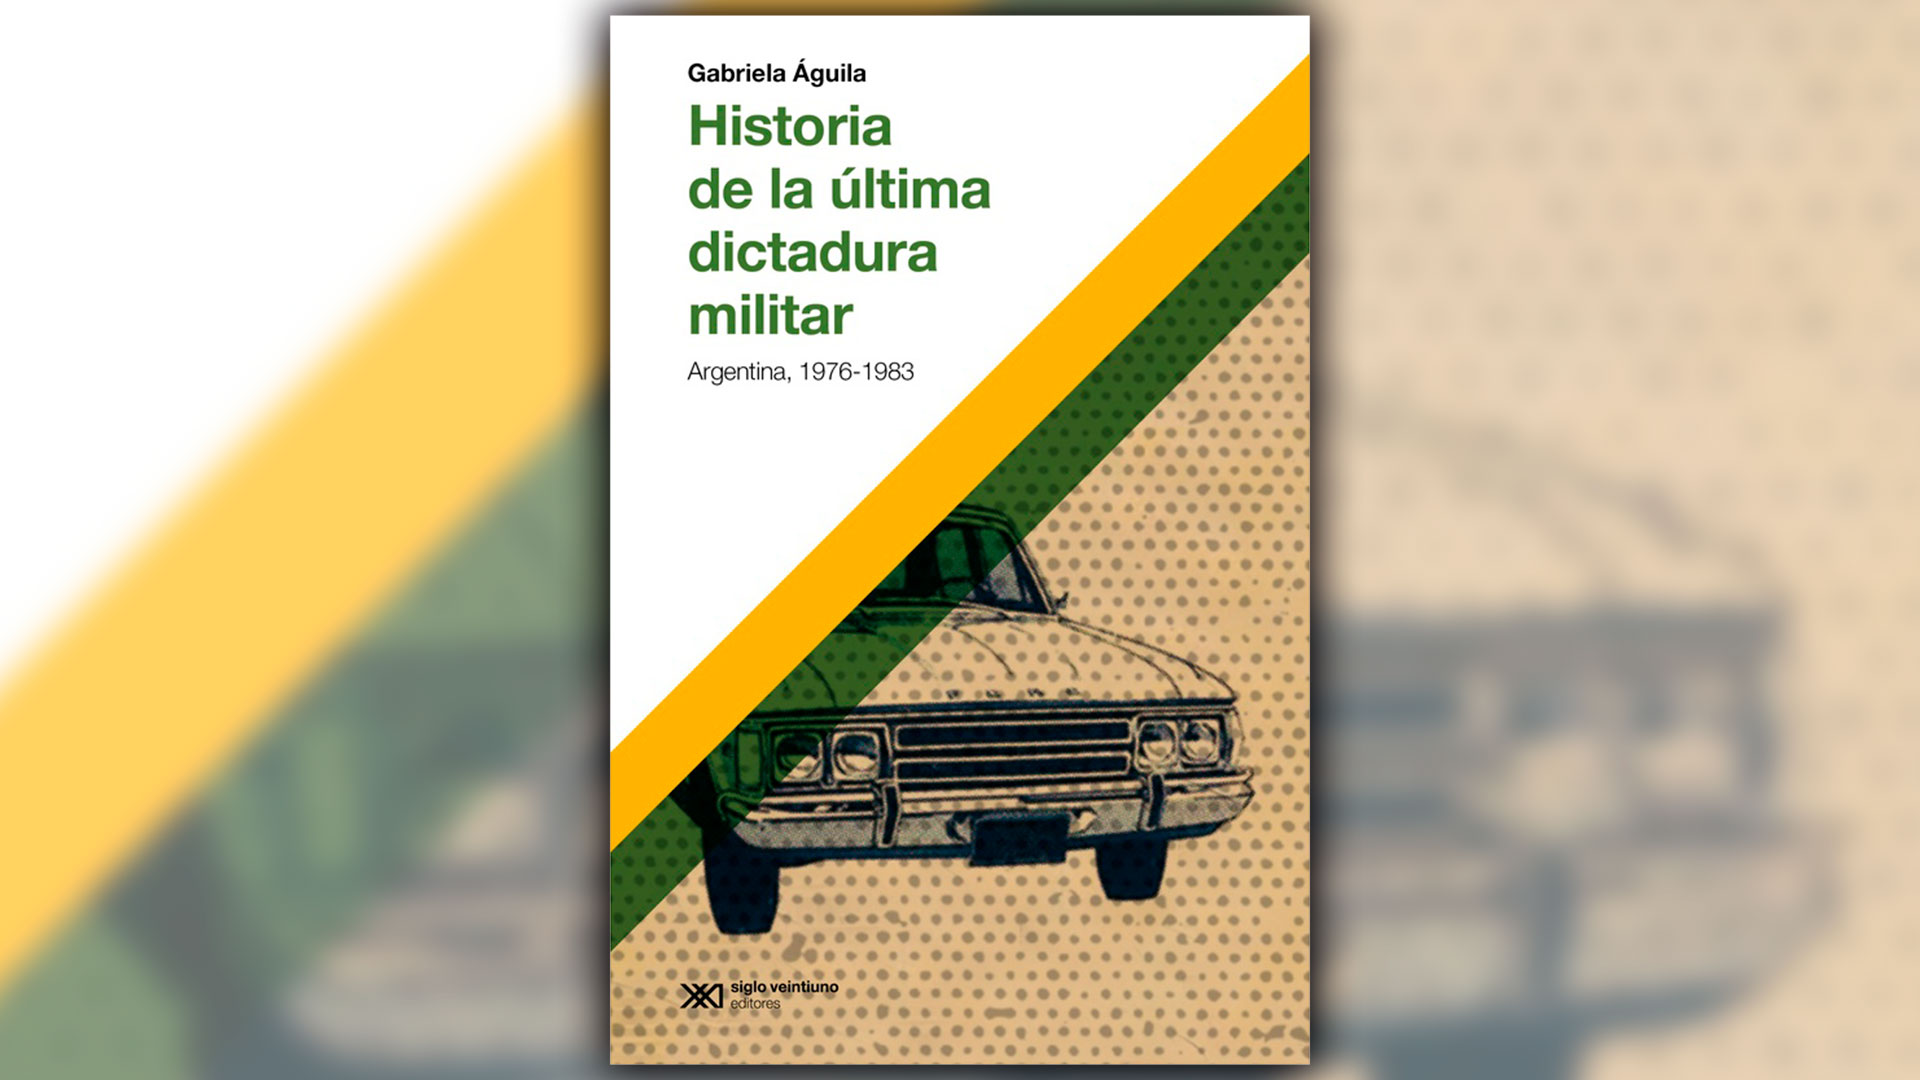 Portada de "Historia de la ultima dictadura militar. Argentina 1976-1983", de Gabriela Águila, editado por Siglo XXI.